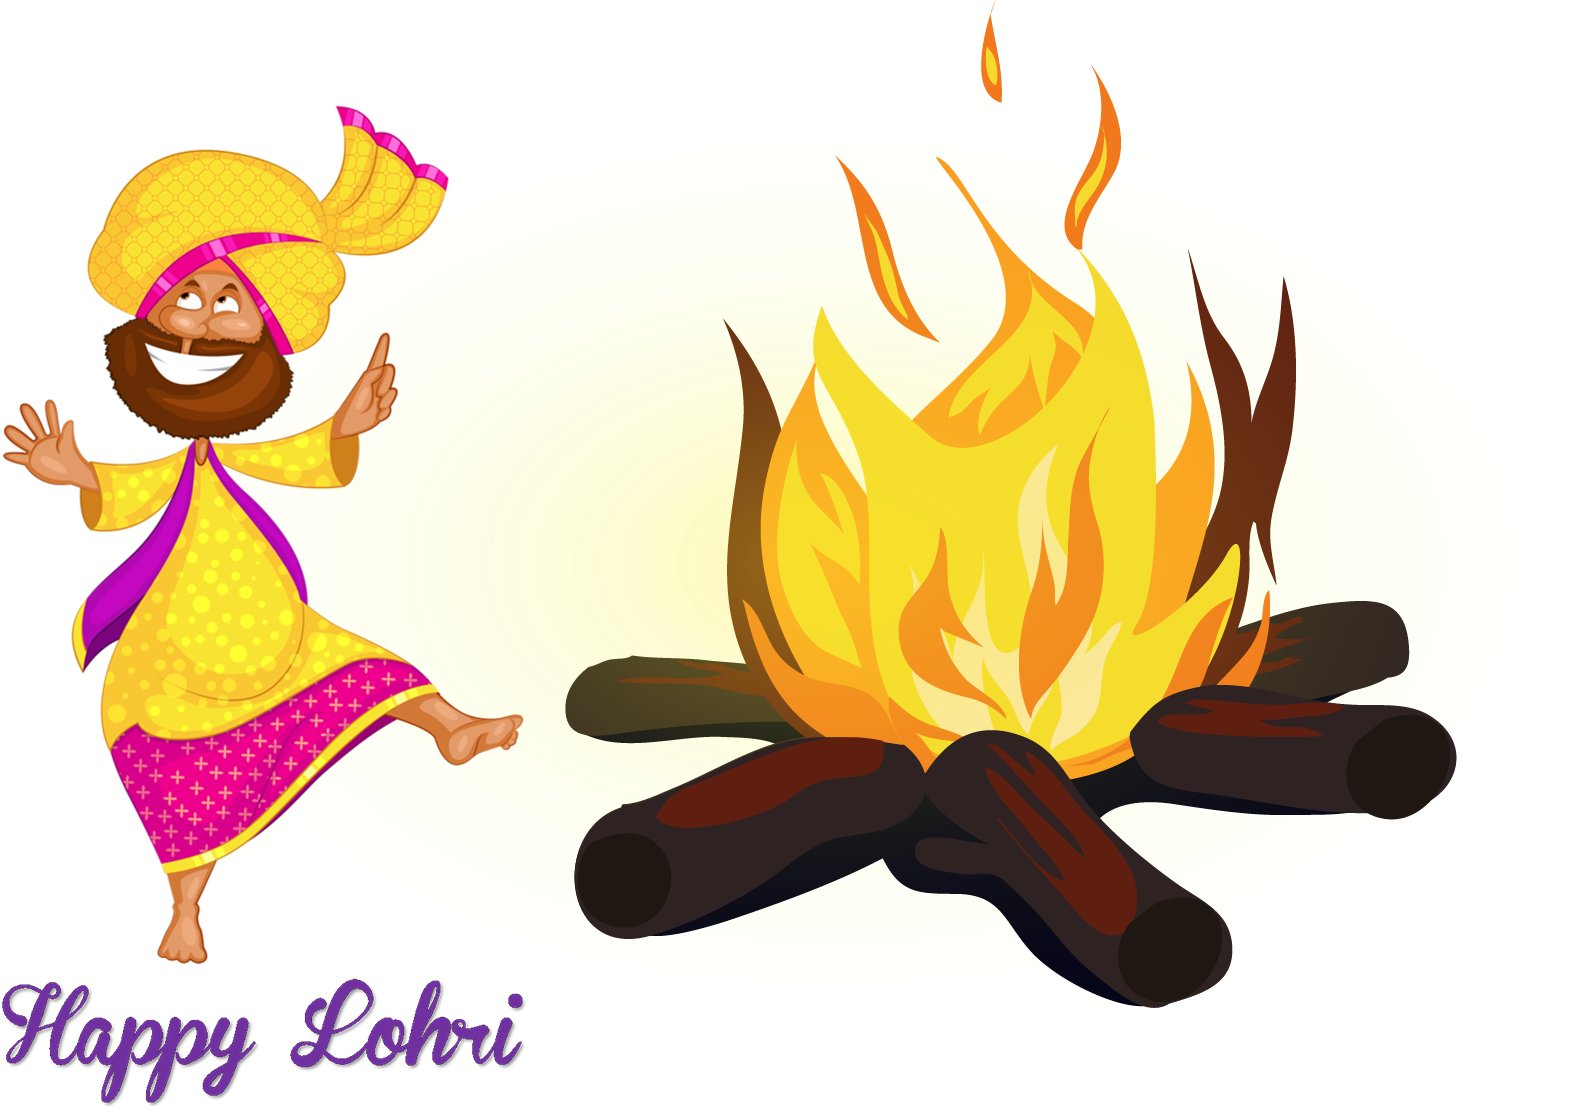 A Cartoon Of A Woman Dancing Next To A Fire